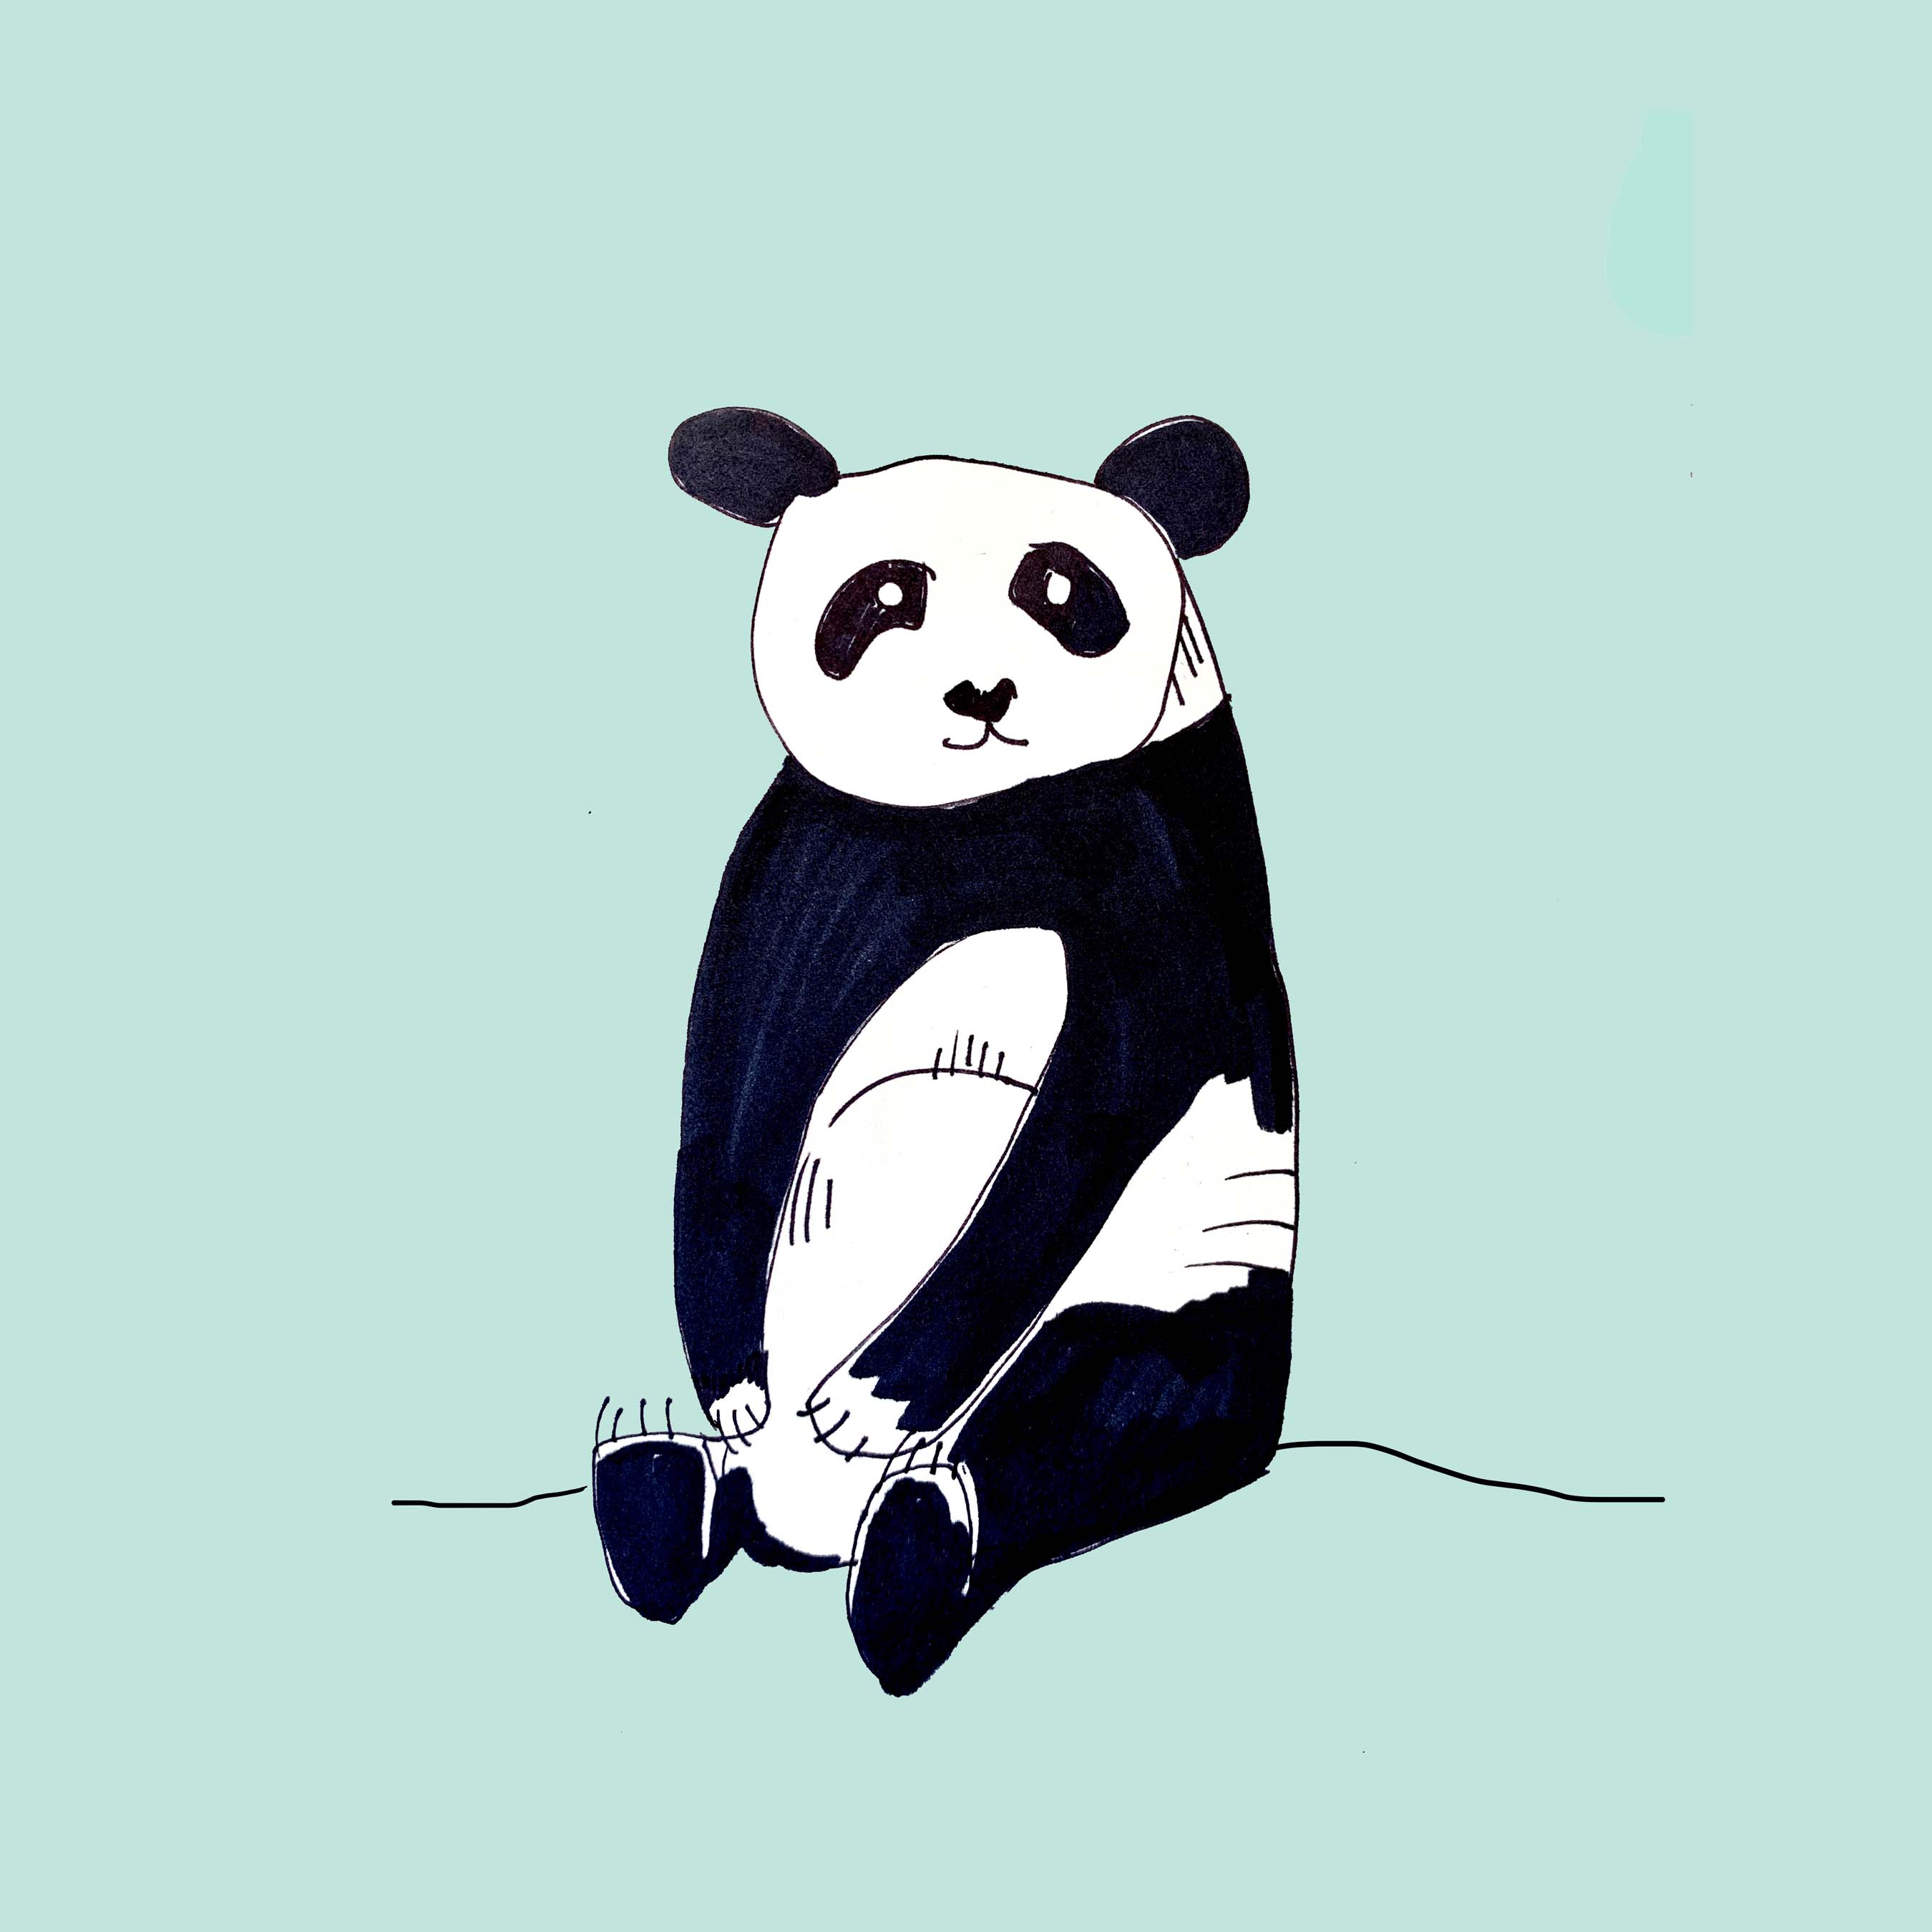 art every day number 621 / illustration / panda